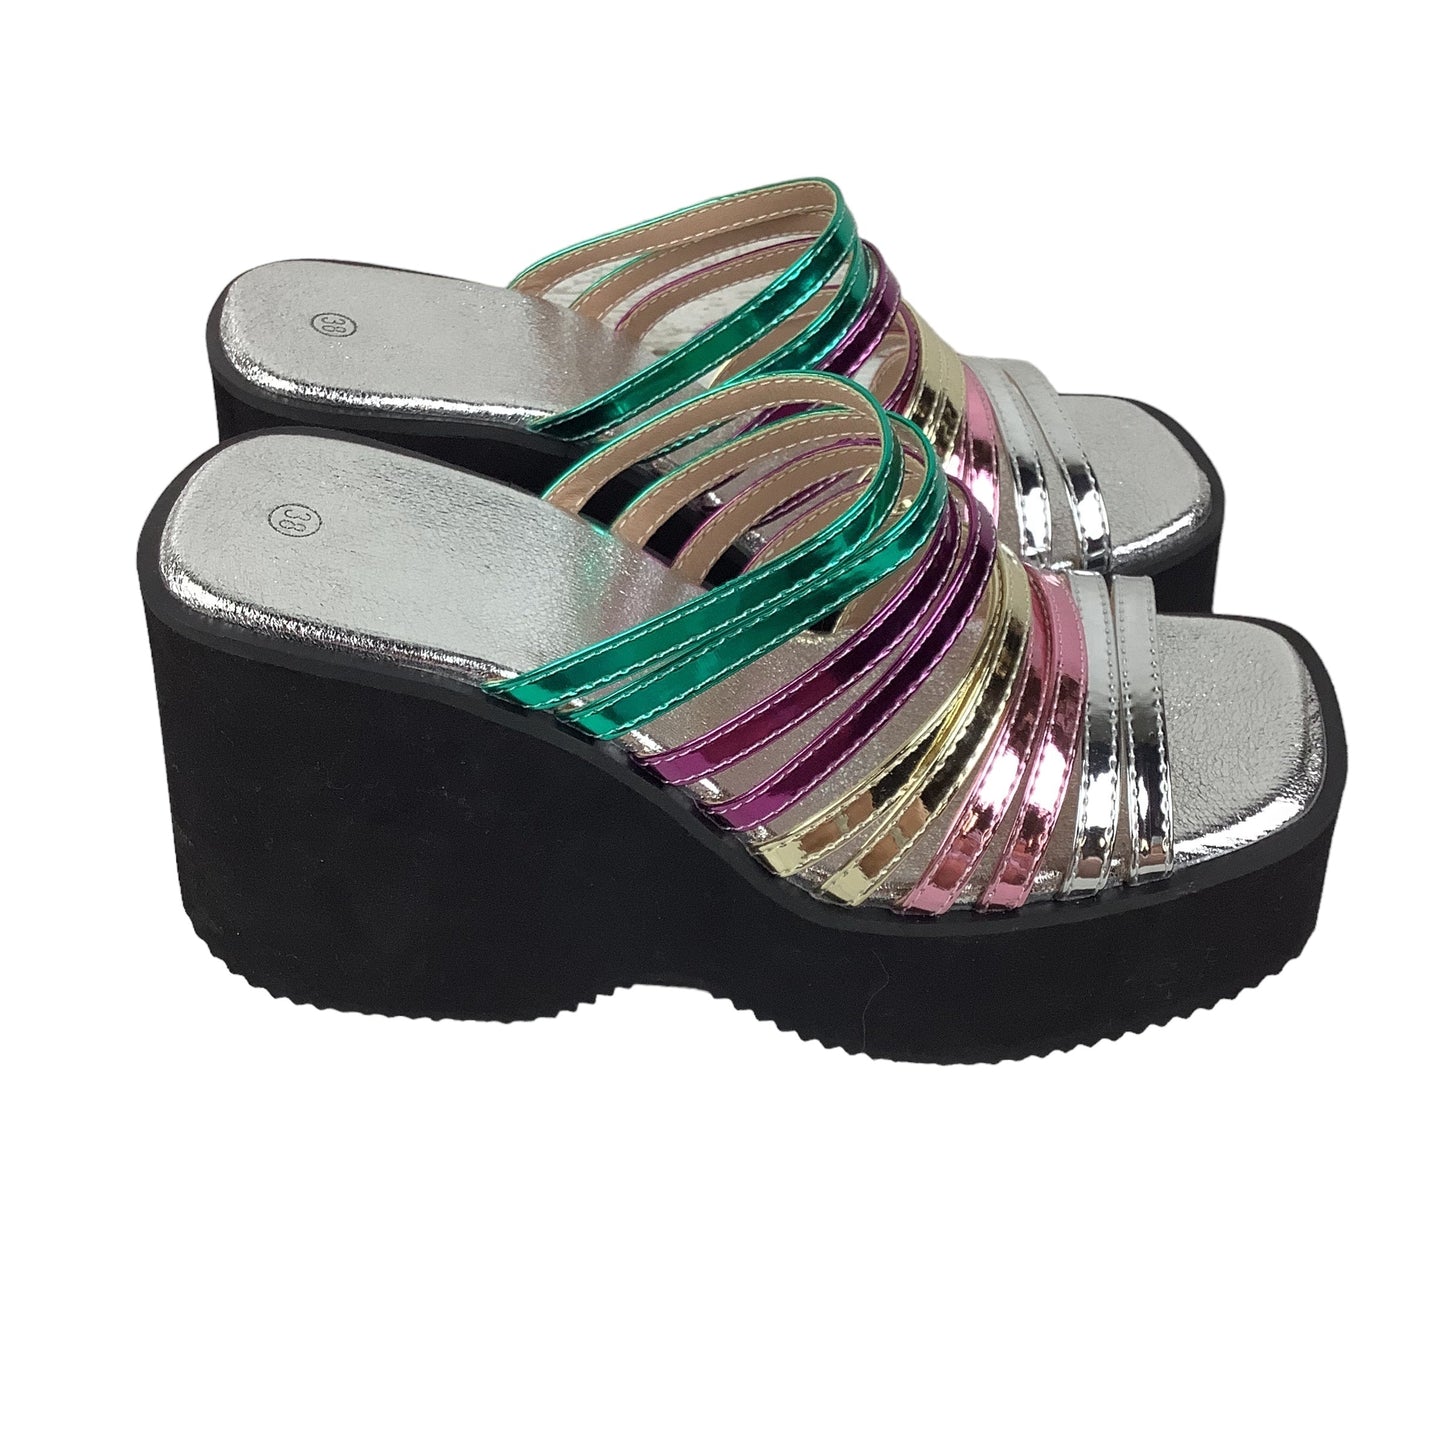 Multi-colored Sandals Heels Platform Clothes Mentor, Size 7.5 (38)